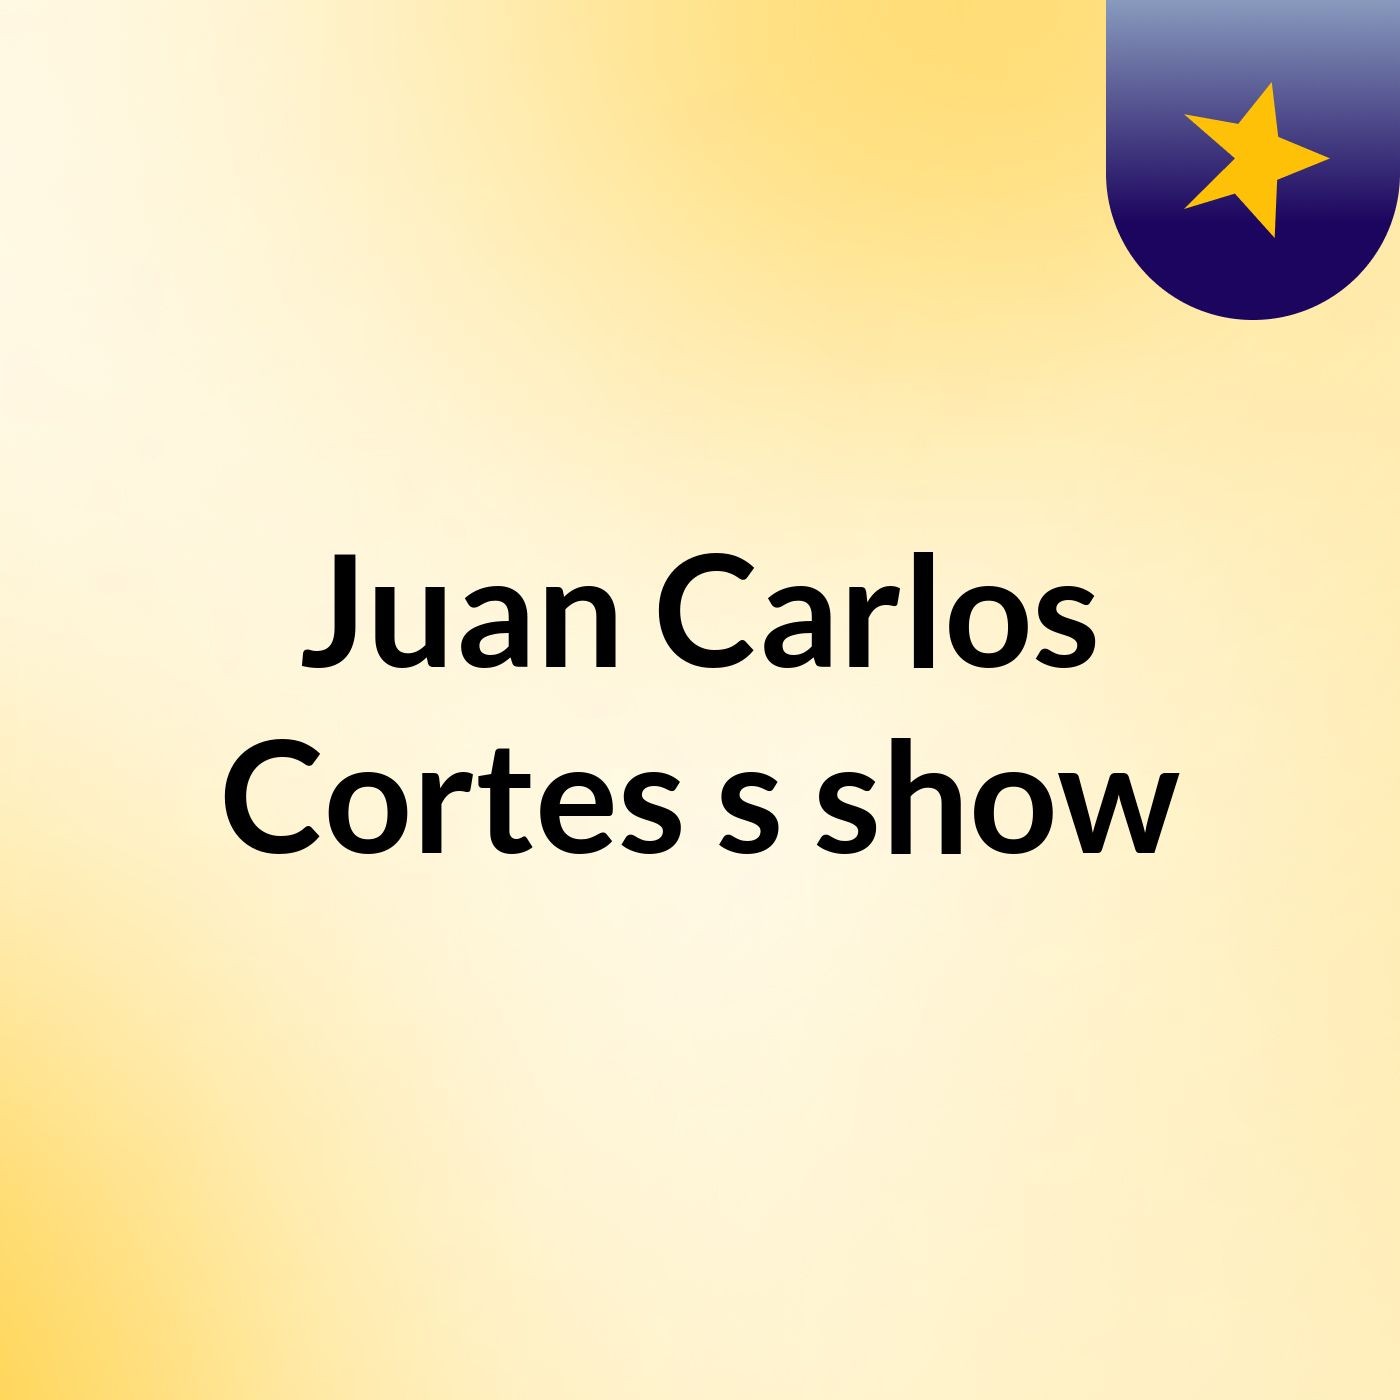 Juan Carlos Cortes's show